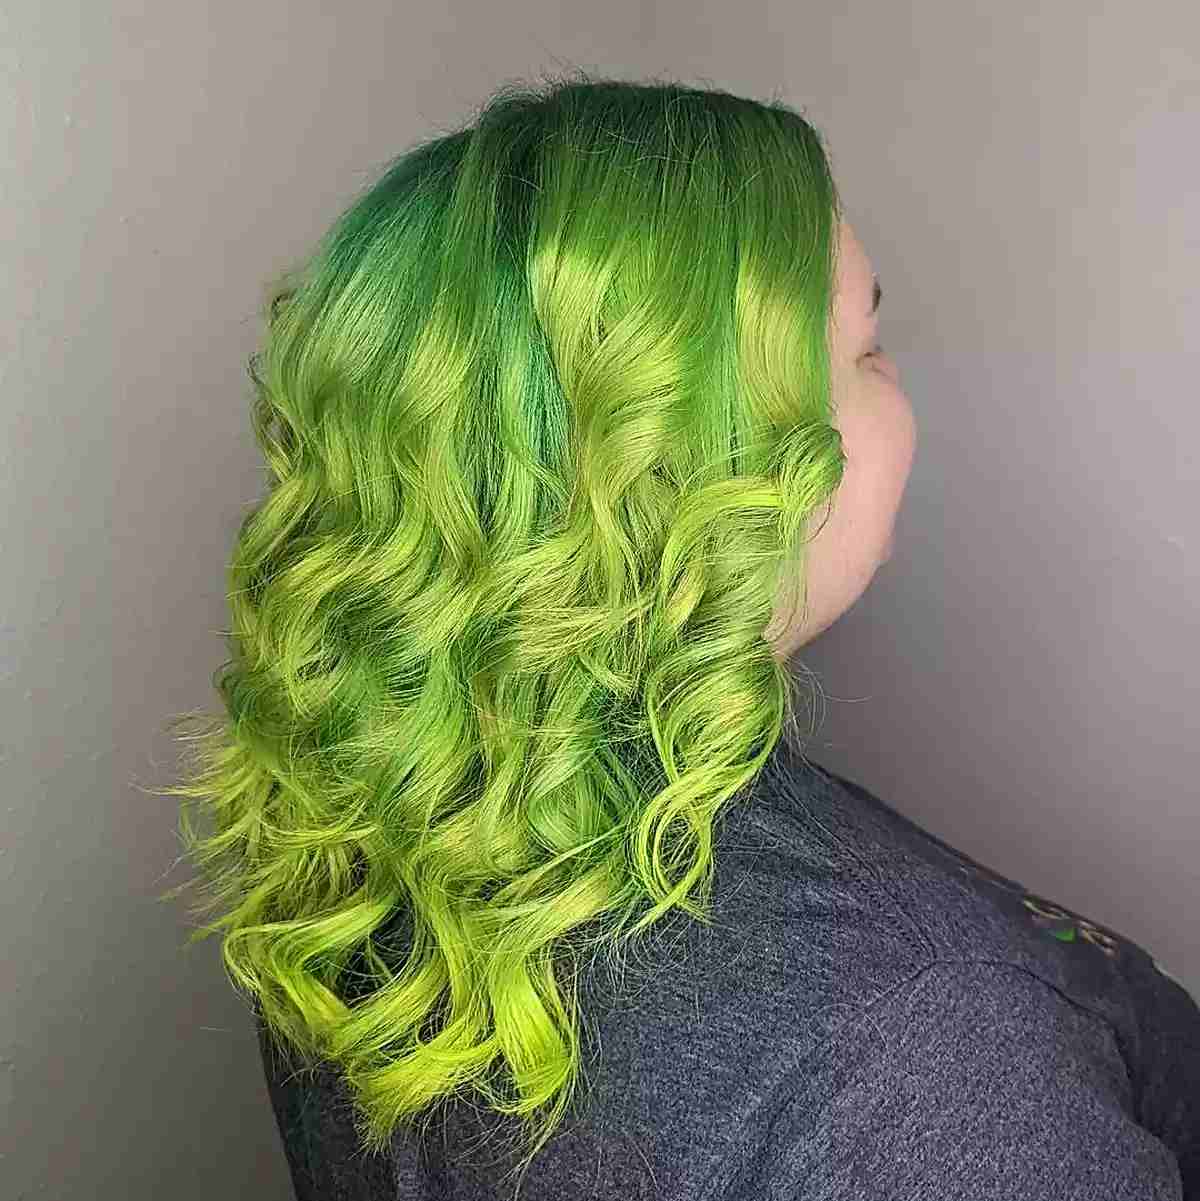 Vivid green hair